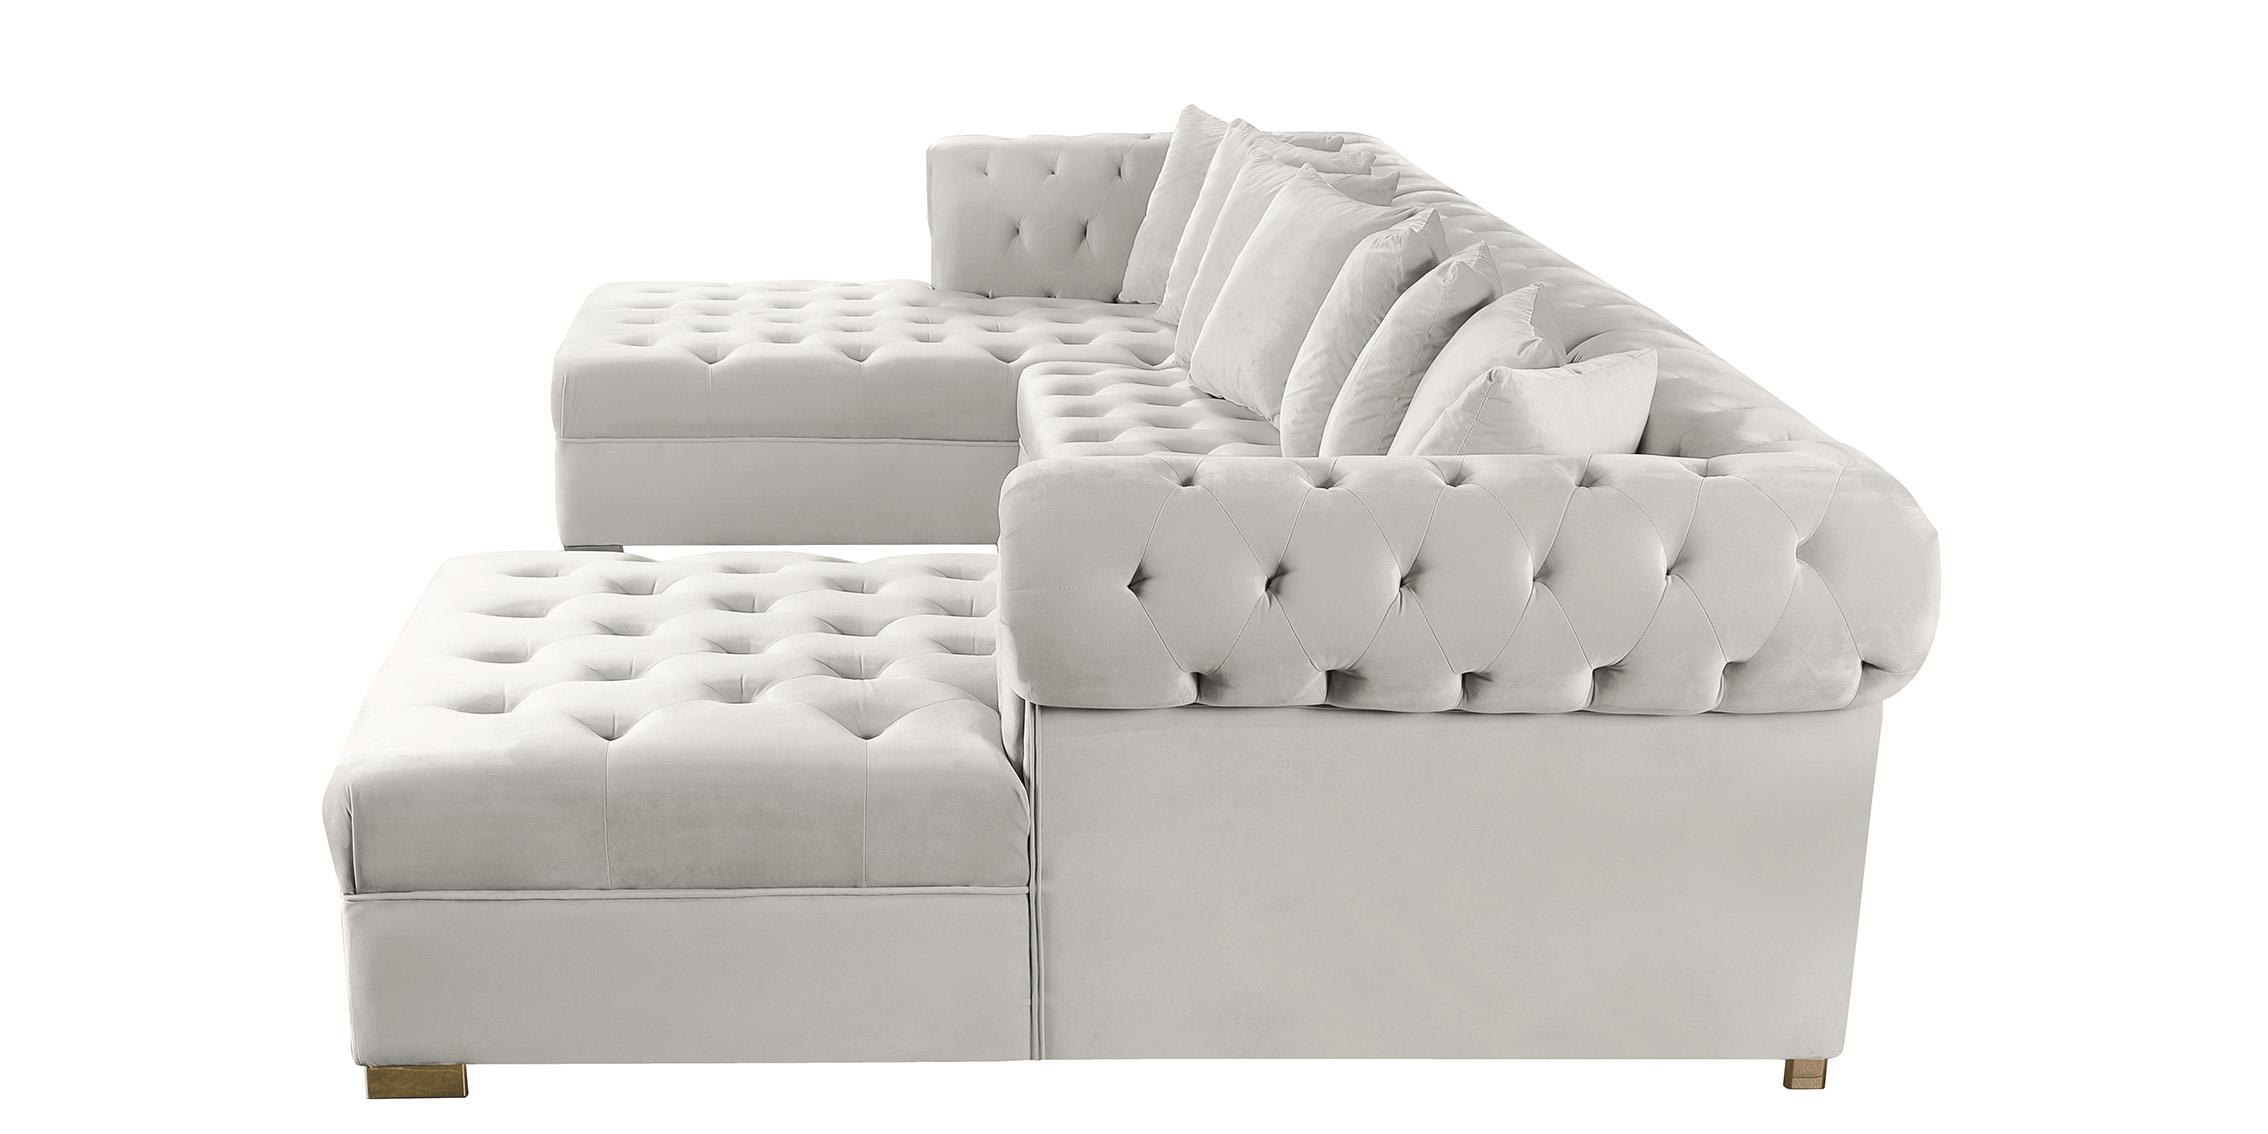 

    
Meridian Furniture PRESLEY 698Cream-Sectional Sectional Sofa Cream 698Cream-Sectional
